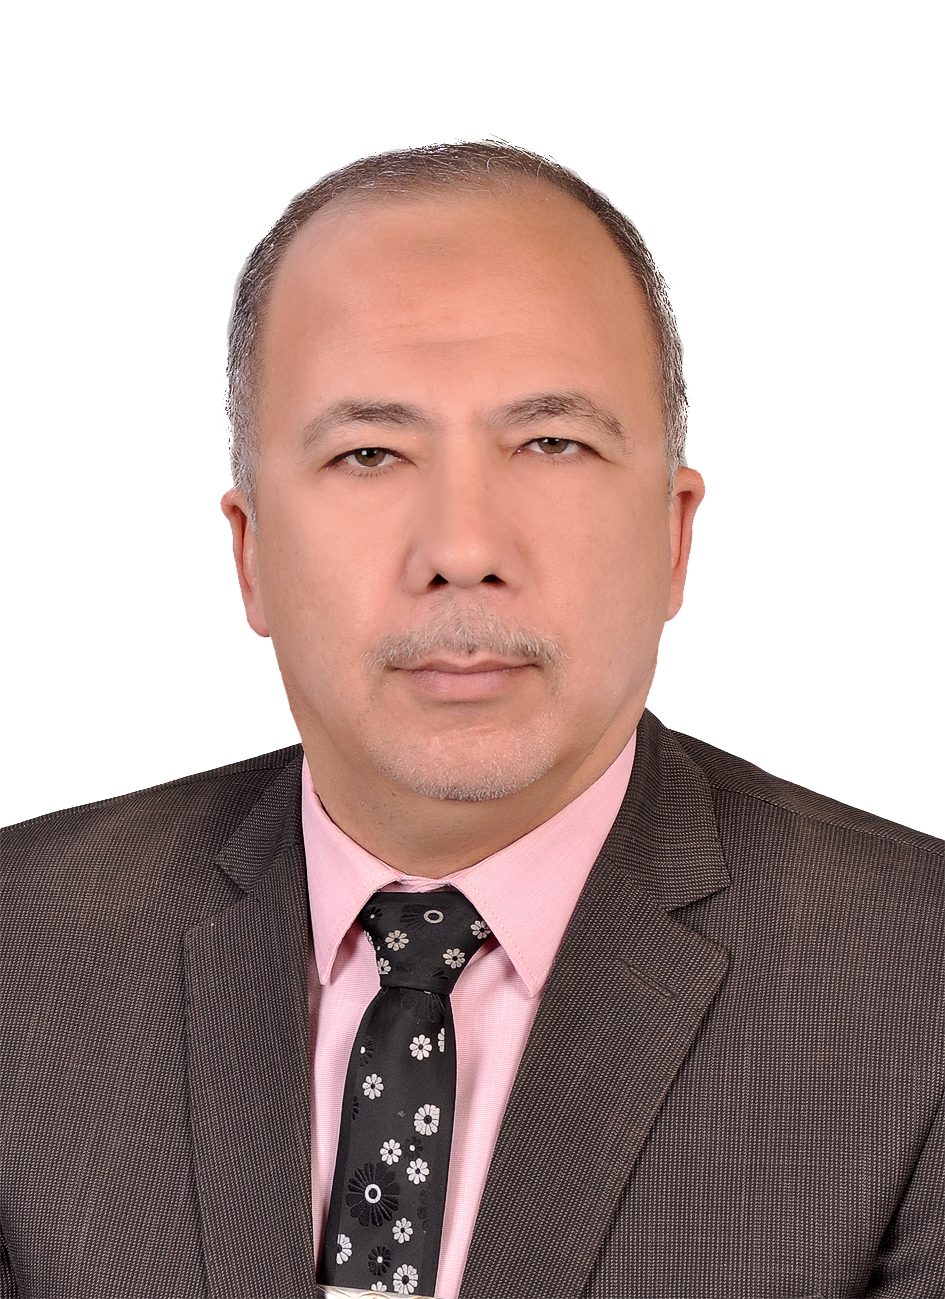 Waleed Fouad Abobatta